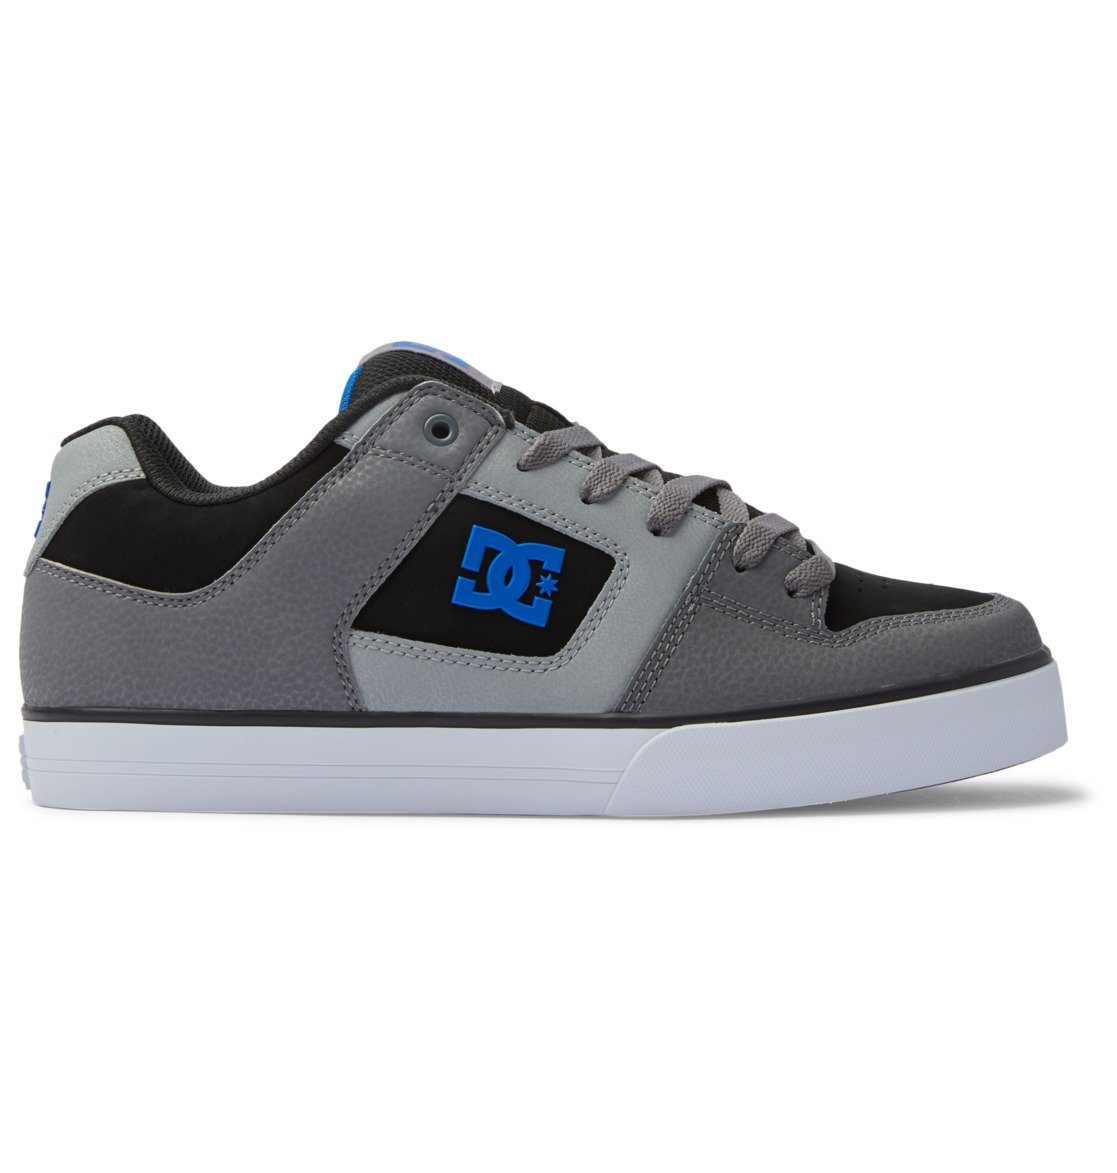 Shoes Sneaker Black/Grey/Blue Pure DC